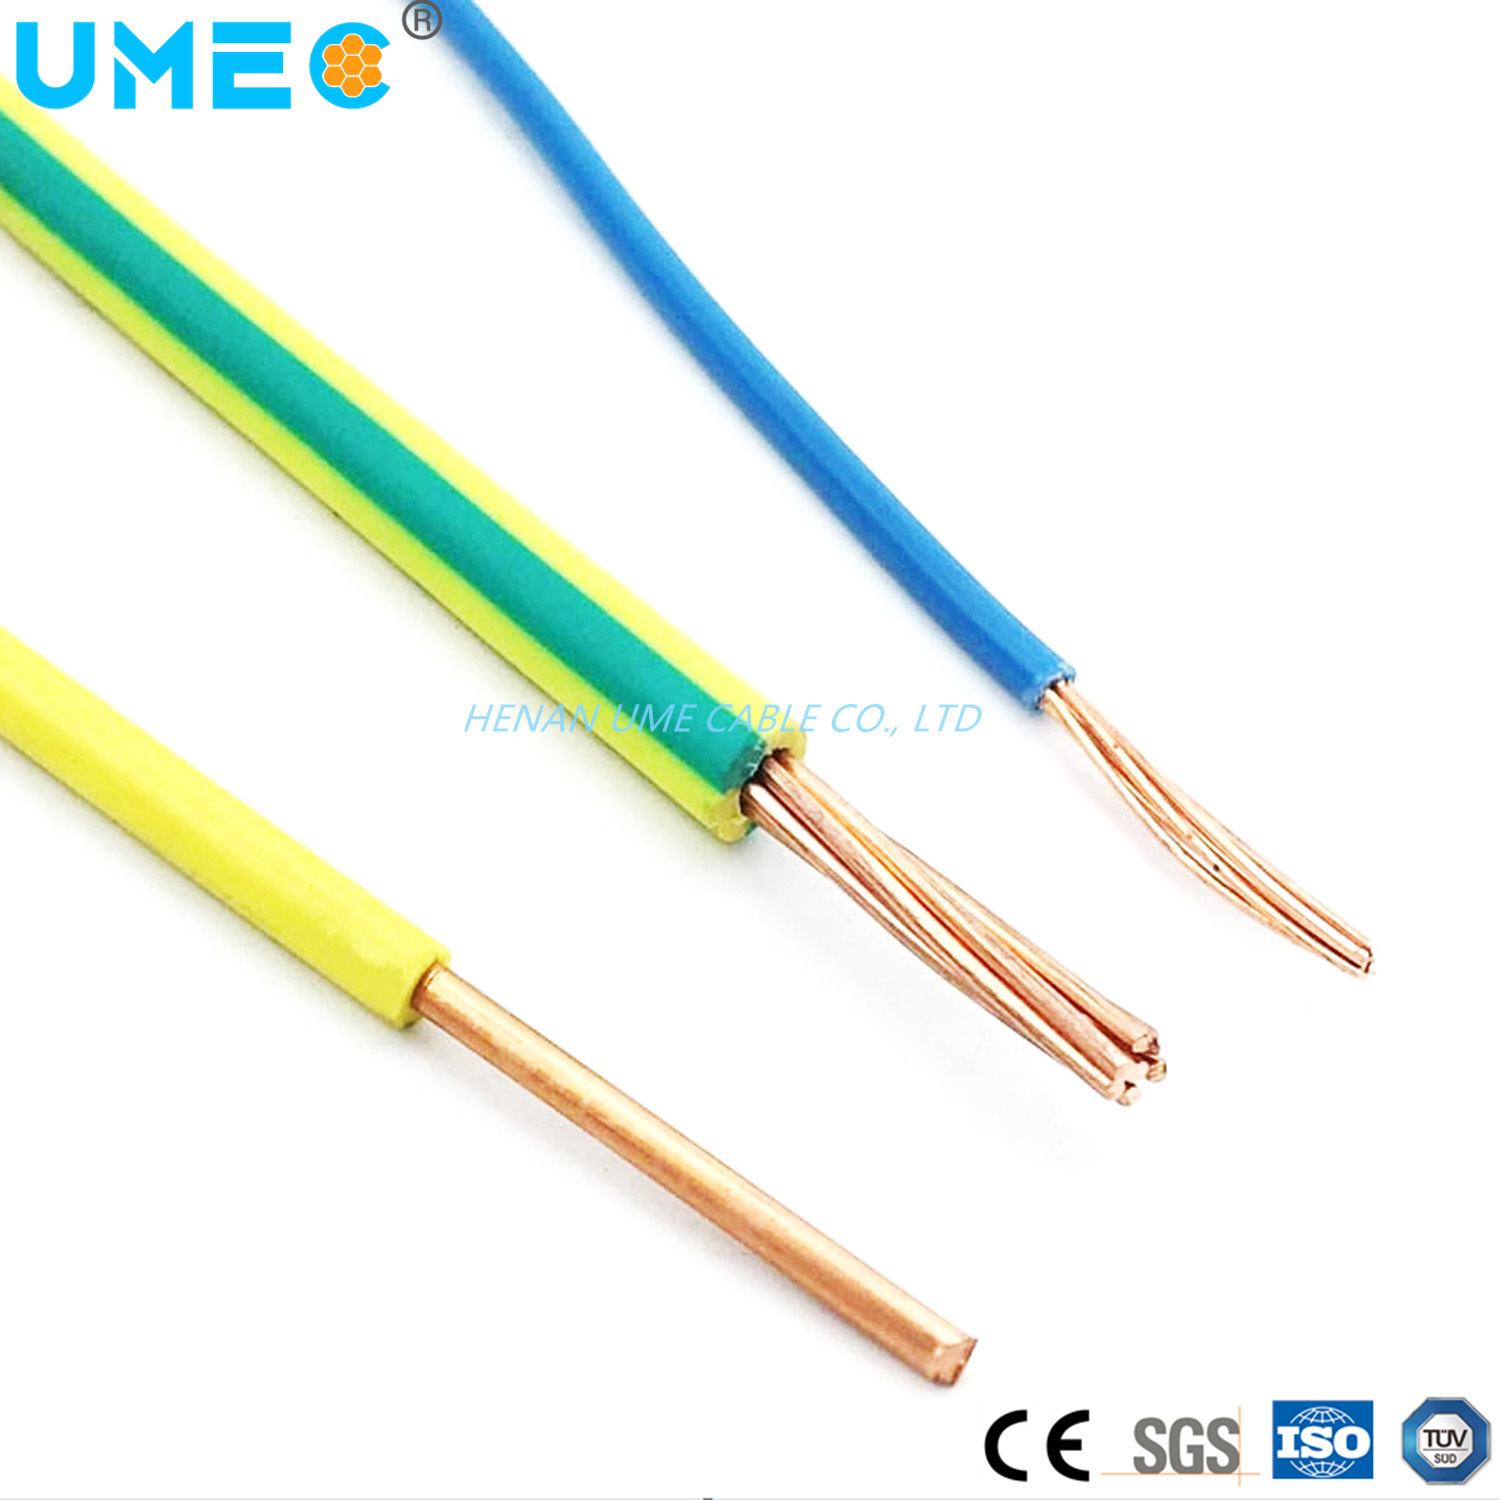 
                2022 Directo de Fábrica de Equipos Electrónicos cable aislado con PVC Super Cable Flexible CVR
            